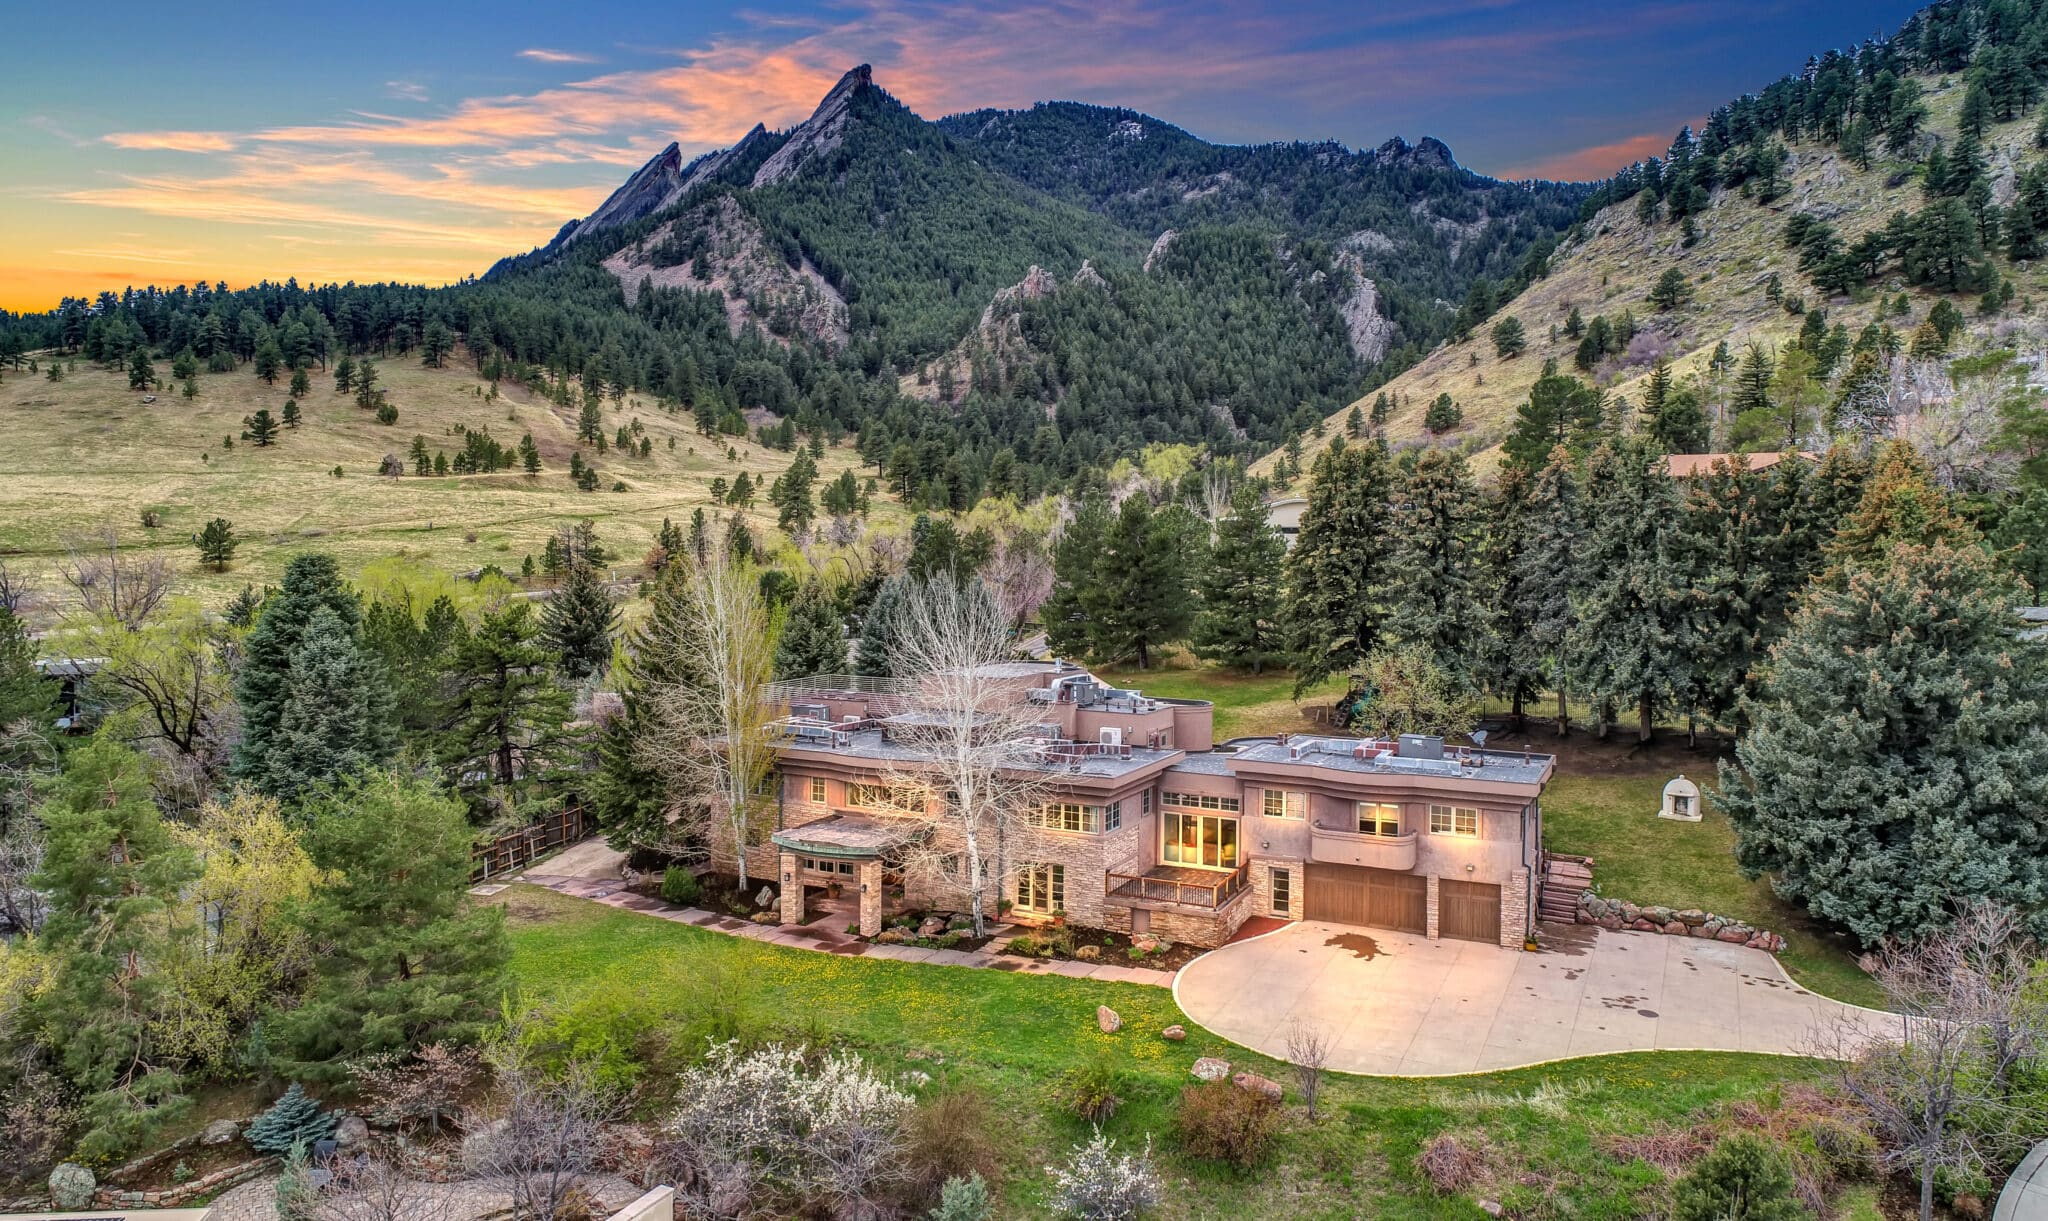 Top home sales in July in the Denver region